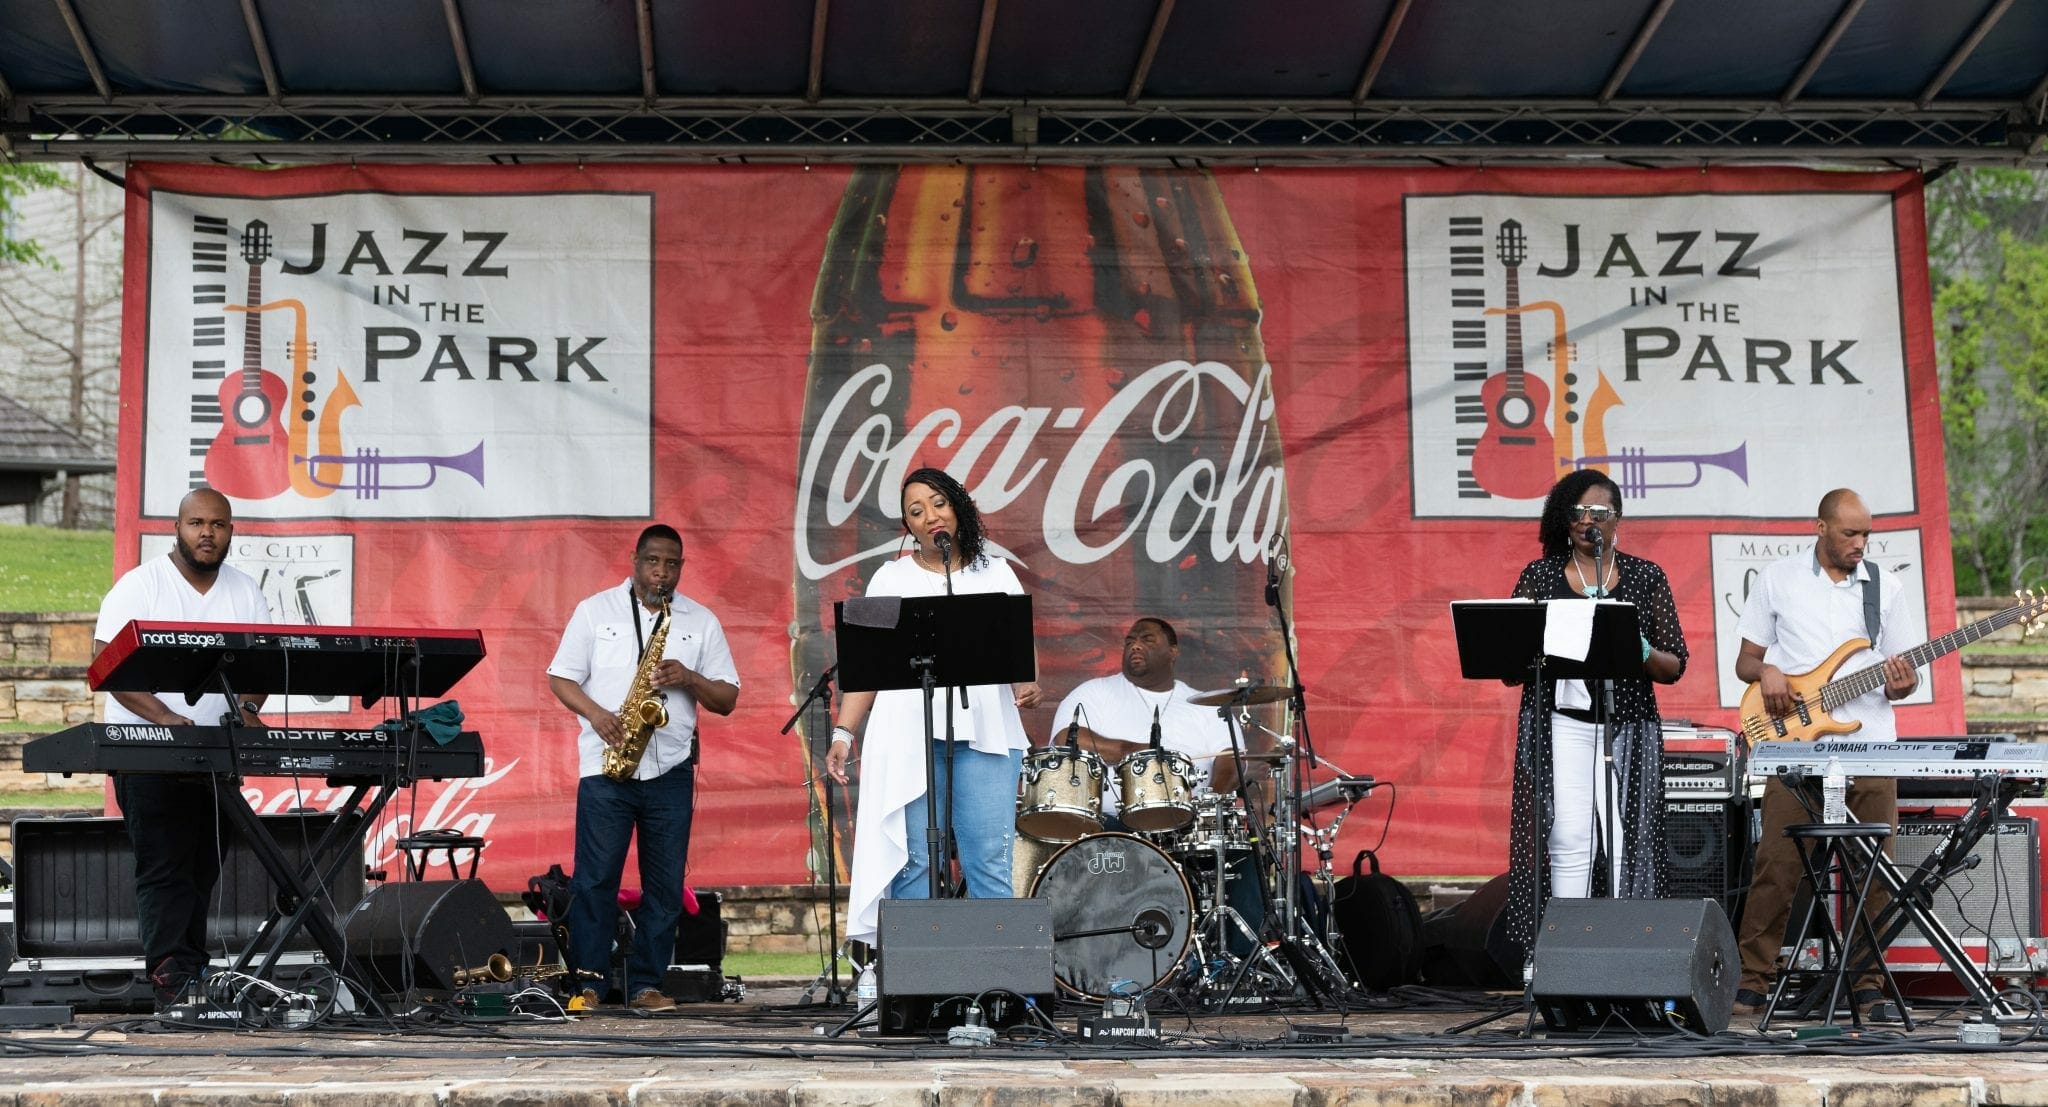 City Scene Jazz in the Park performers TJW 0377